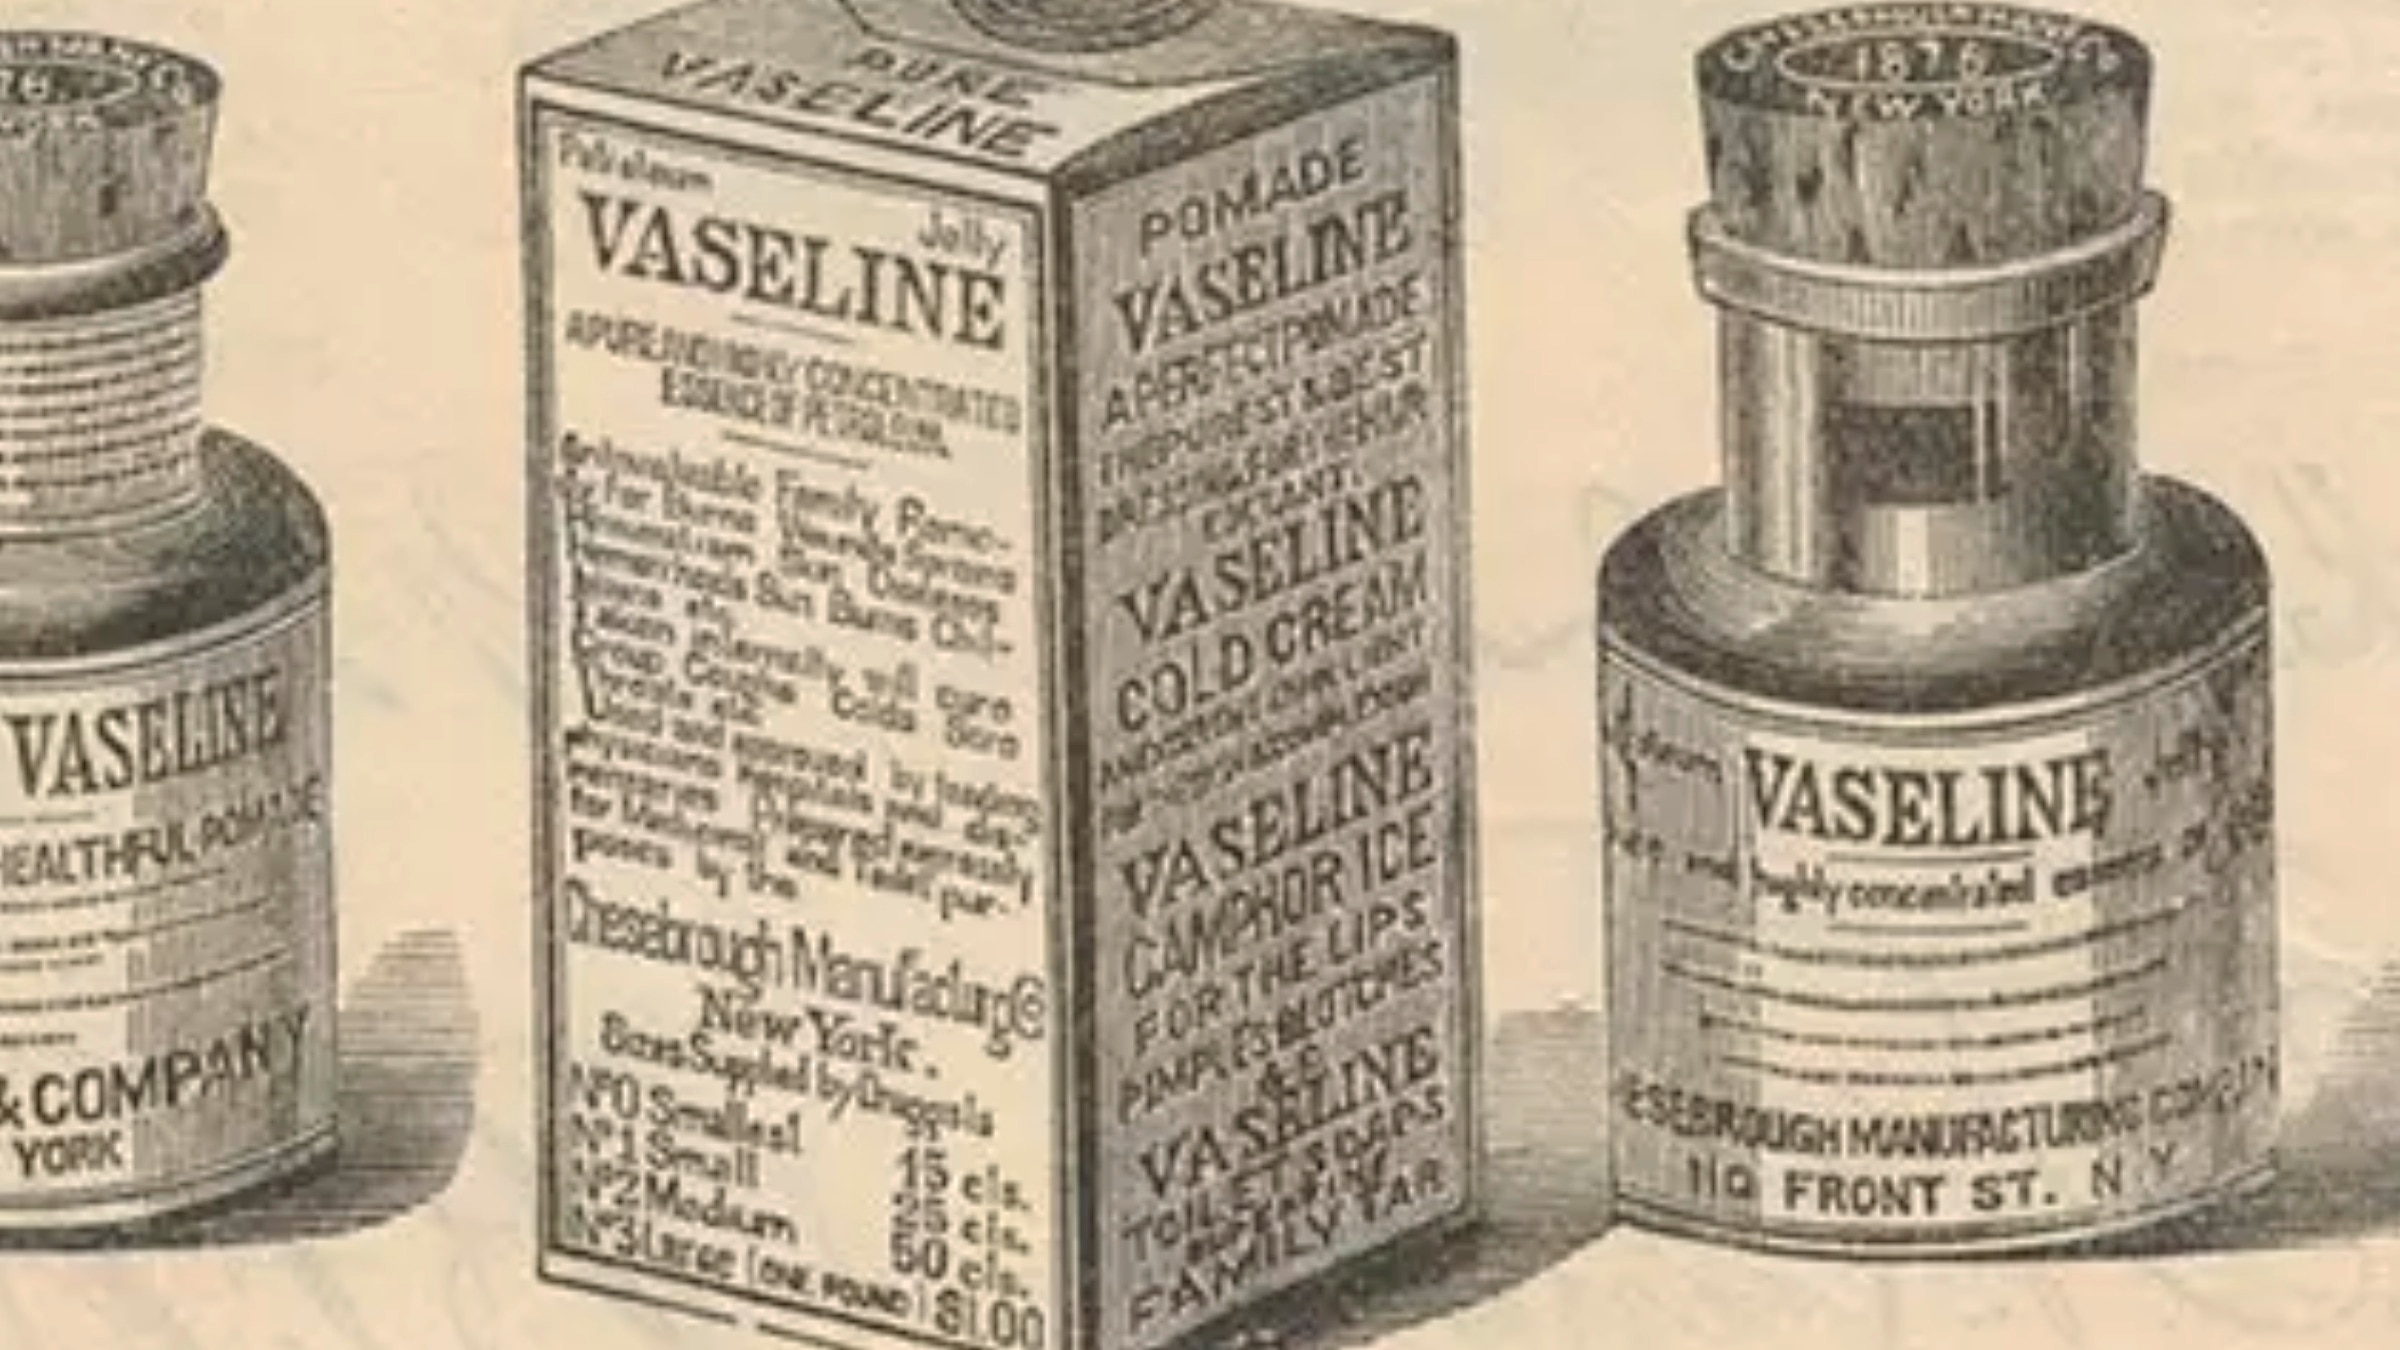 a vintage ad of Vaseline's Petroleum Jelly